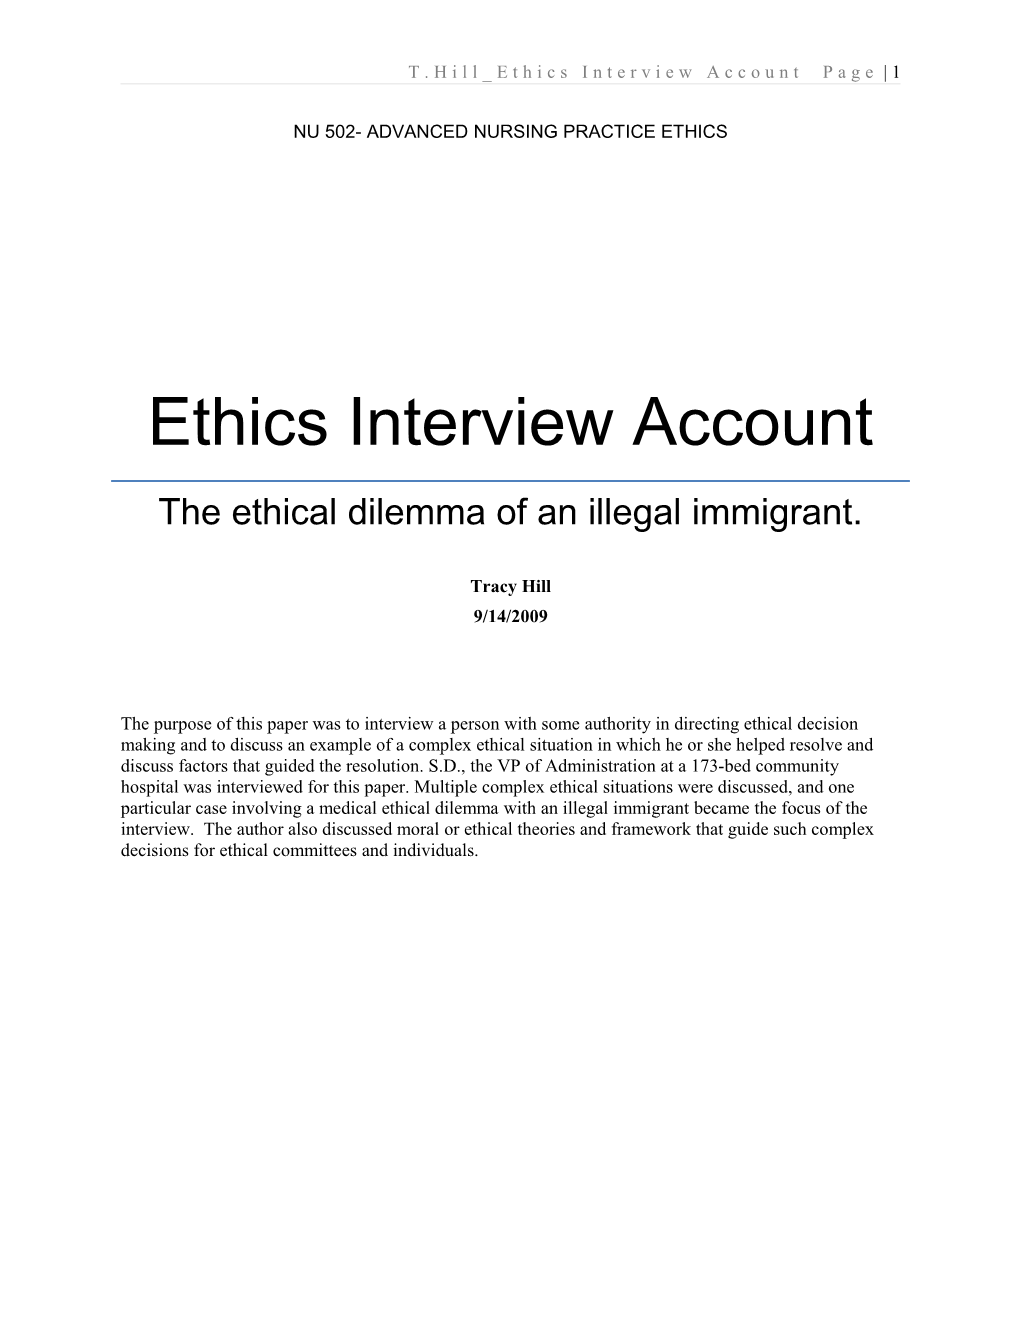 Ethics Interview Account